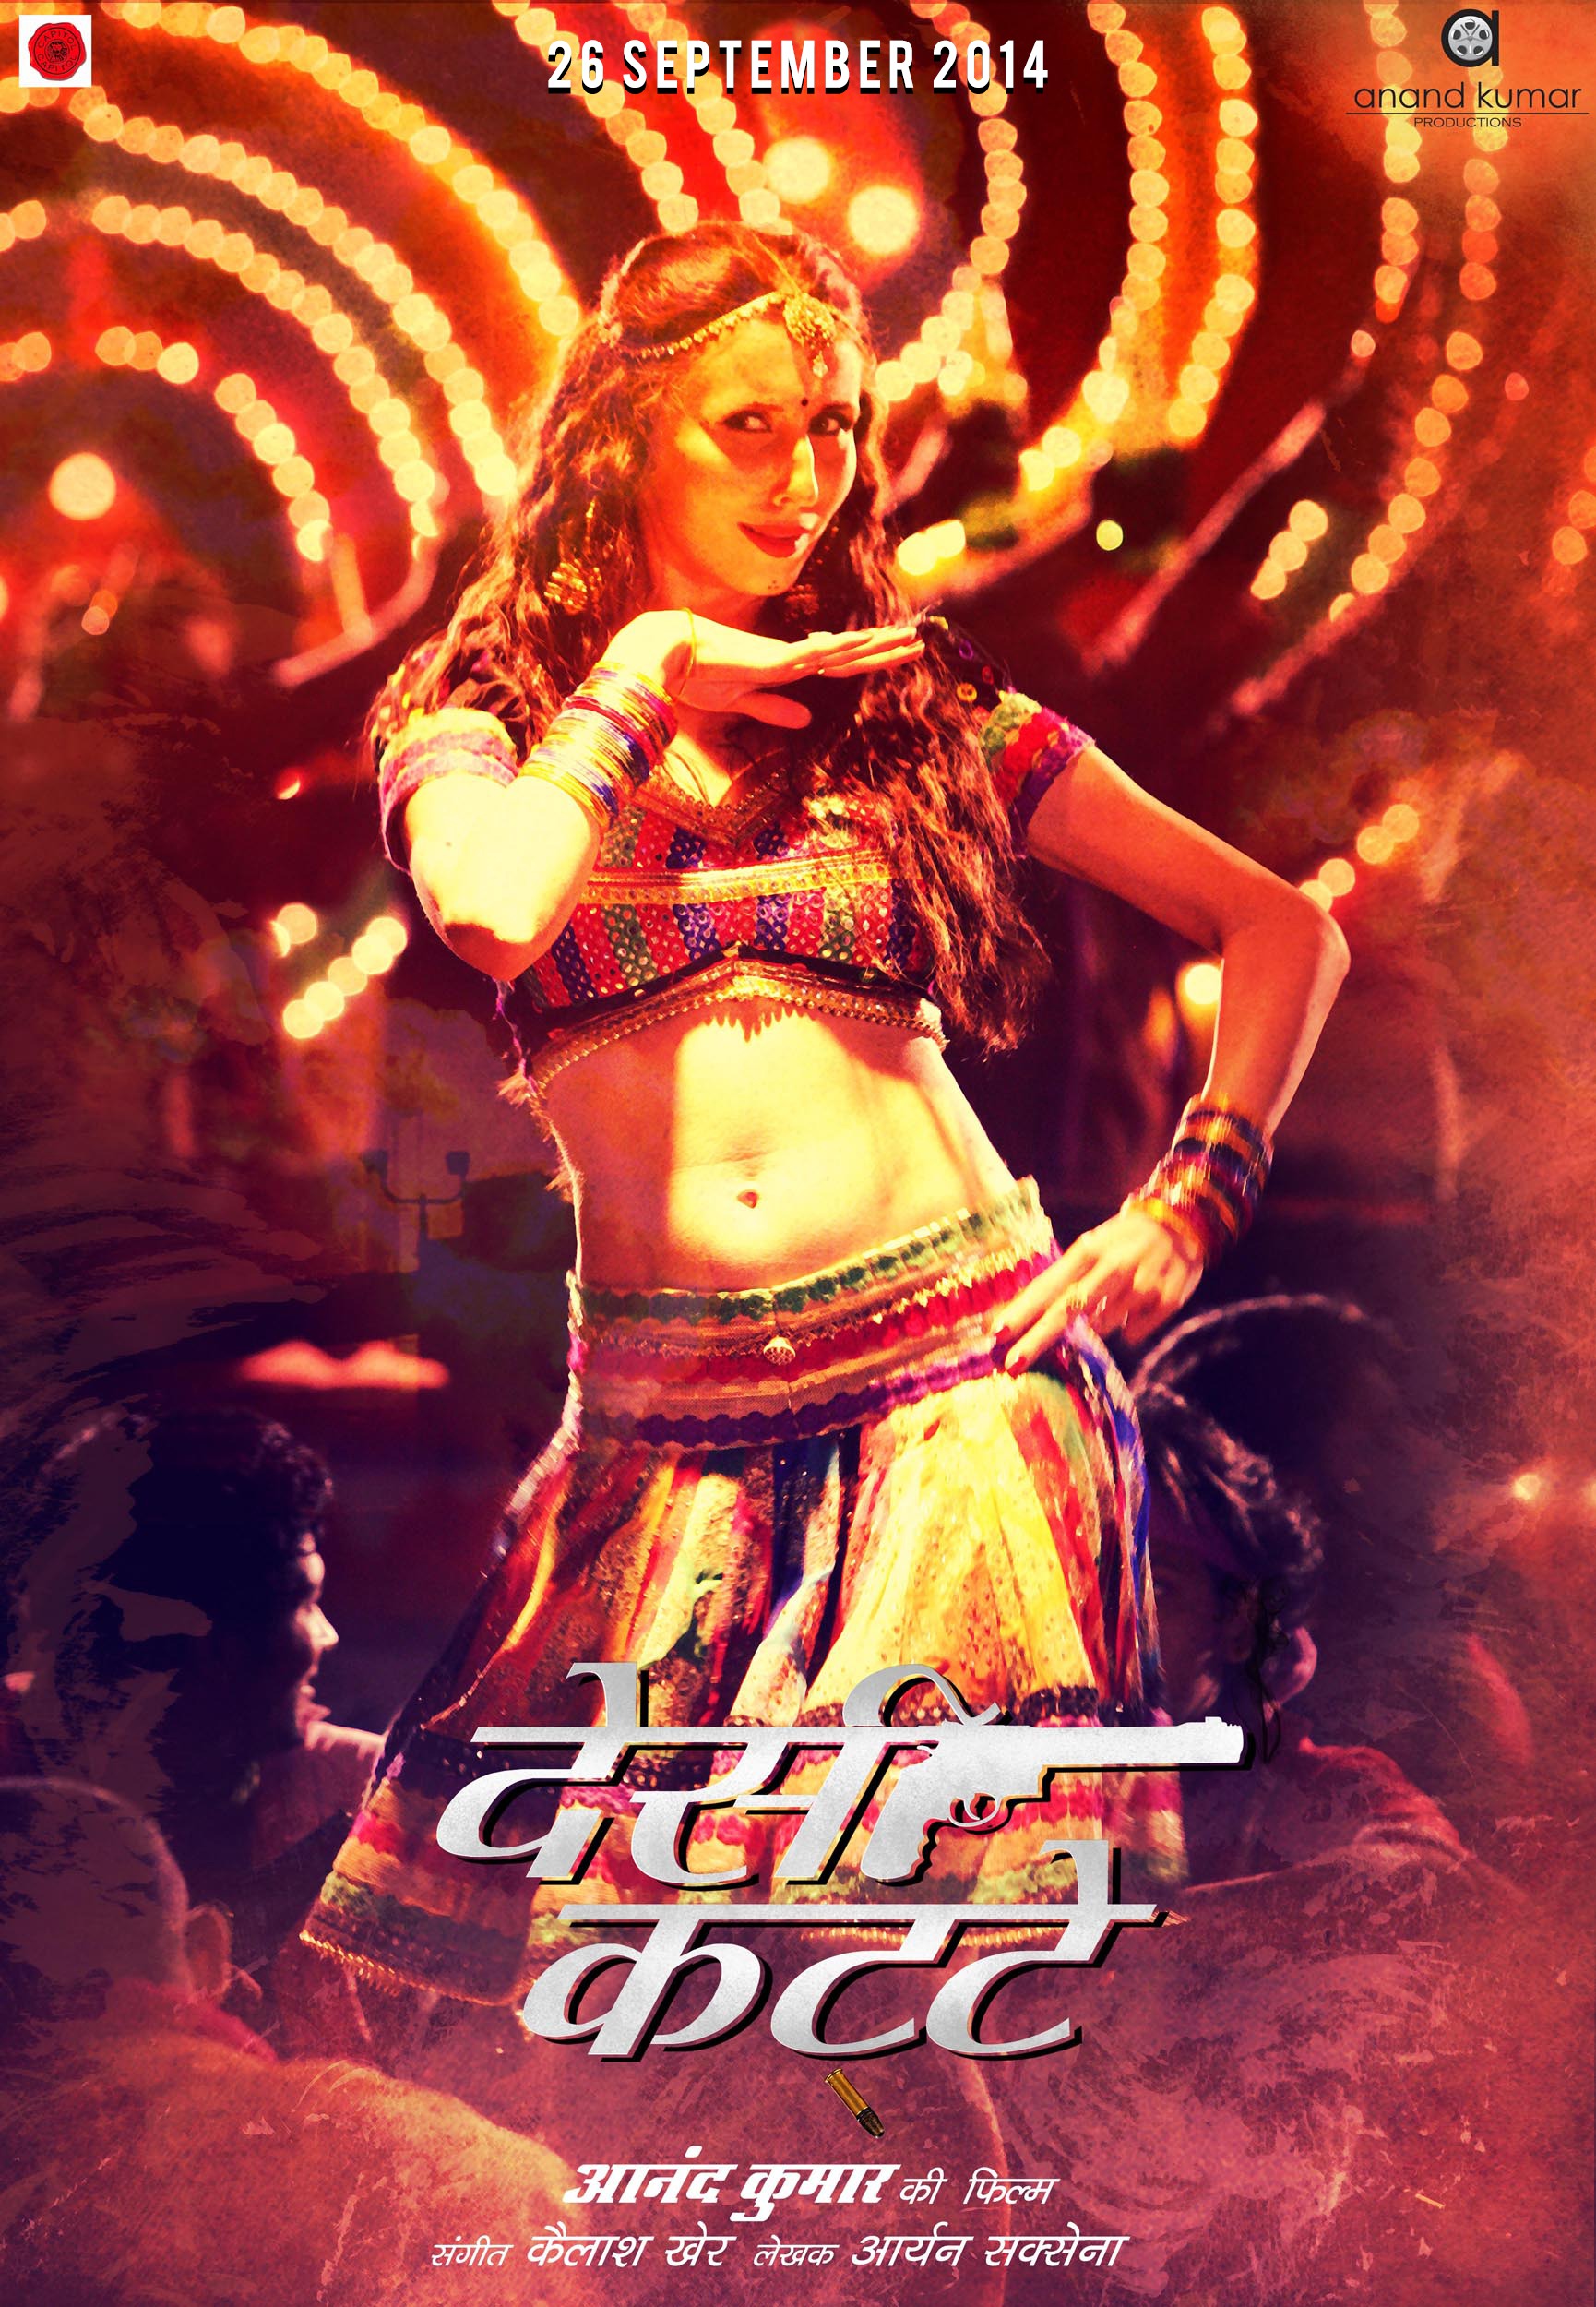 Mega Sized Movie Poster Image for Desi Kattey (#3 of 6)